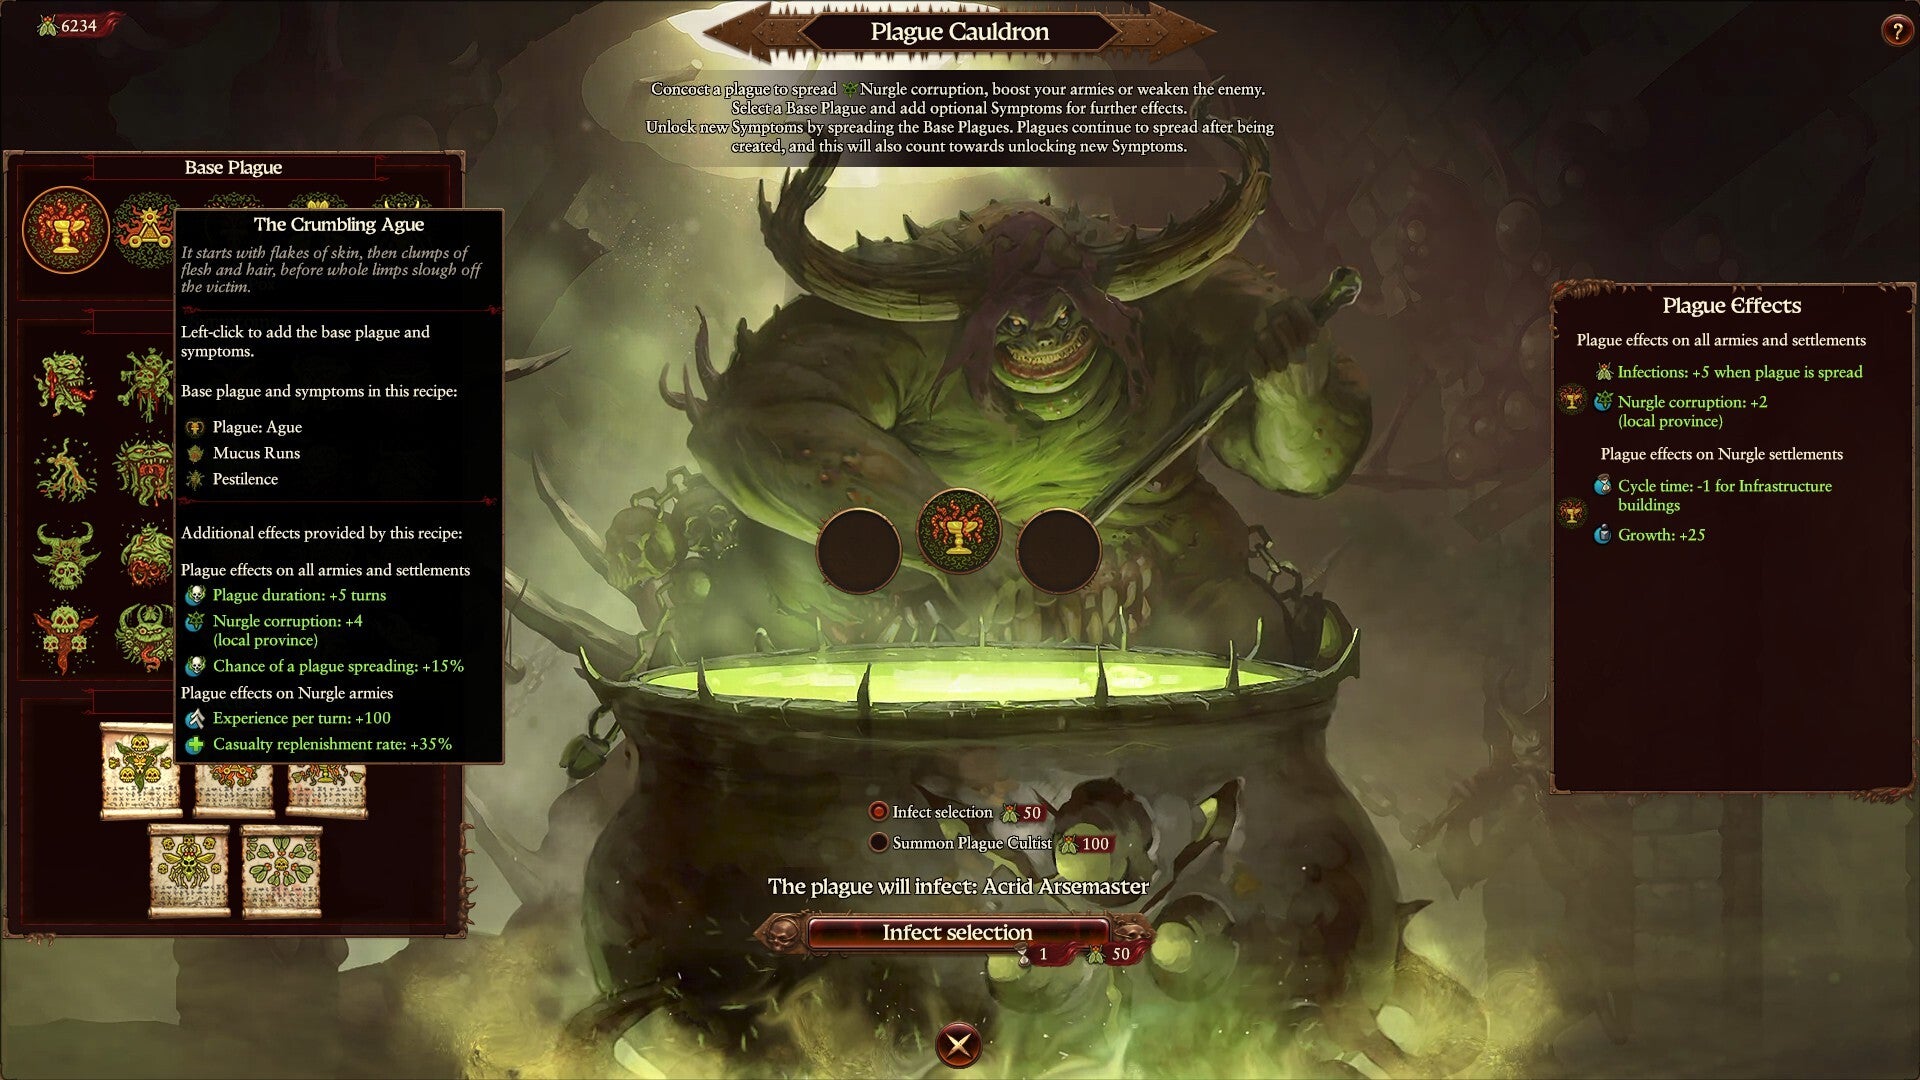 The Plague Cauldron from Total War: Warhammer 3.